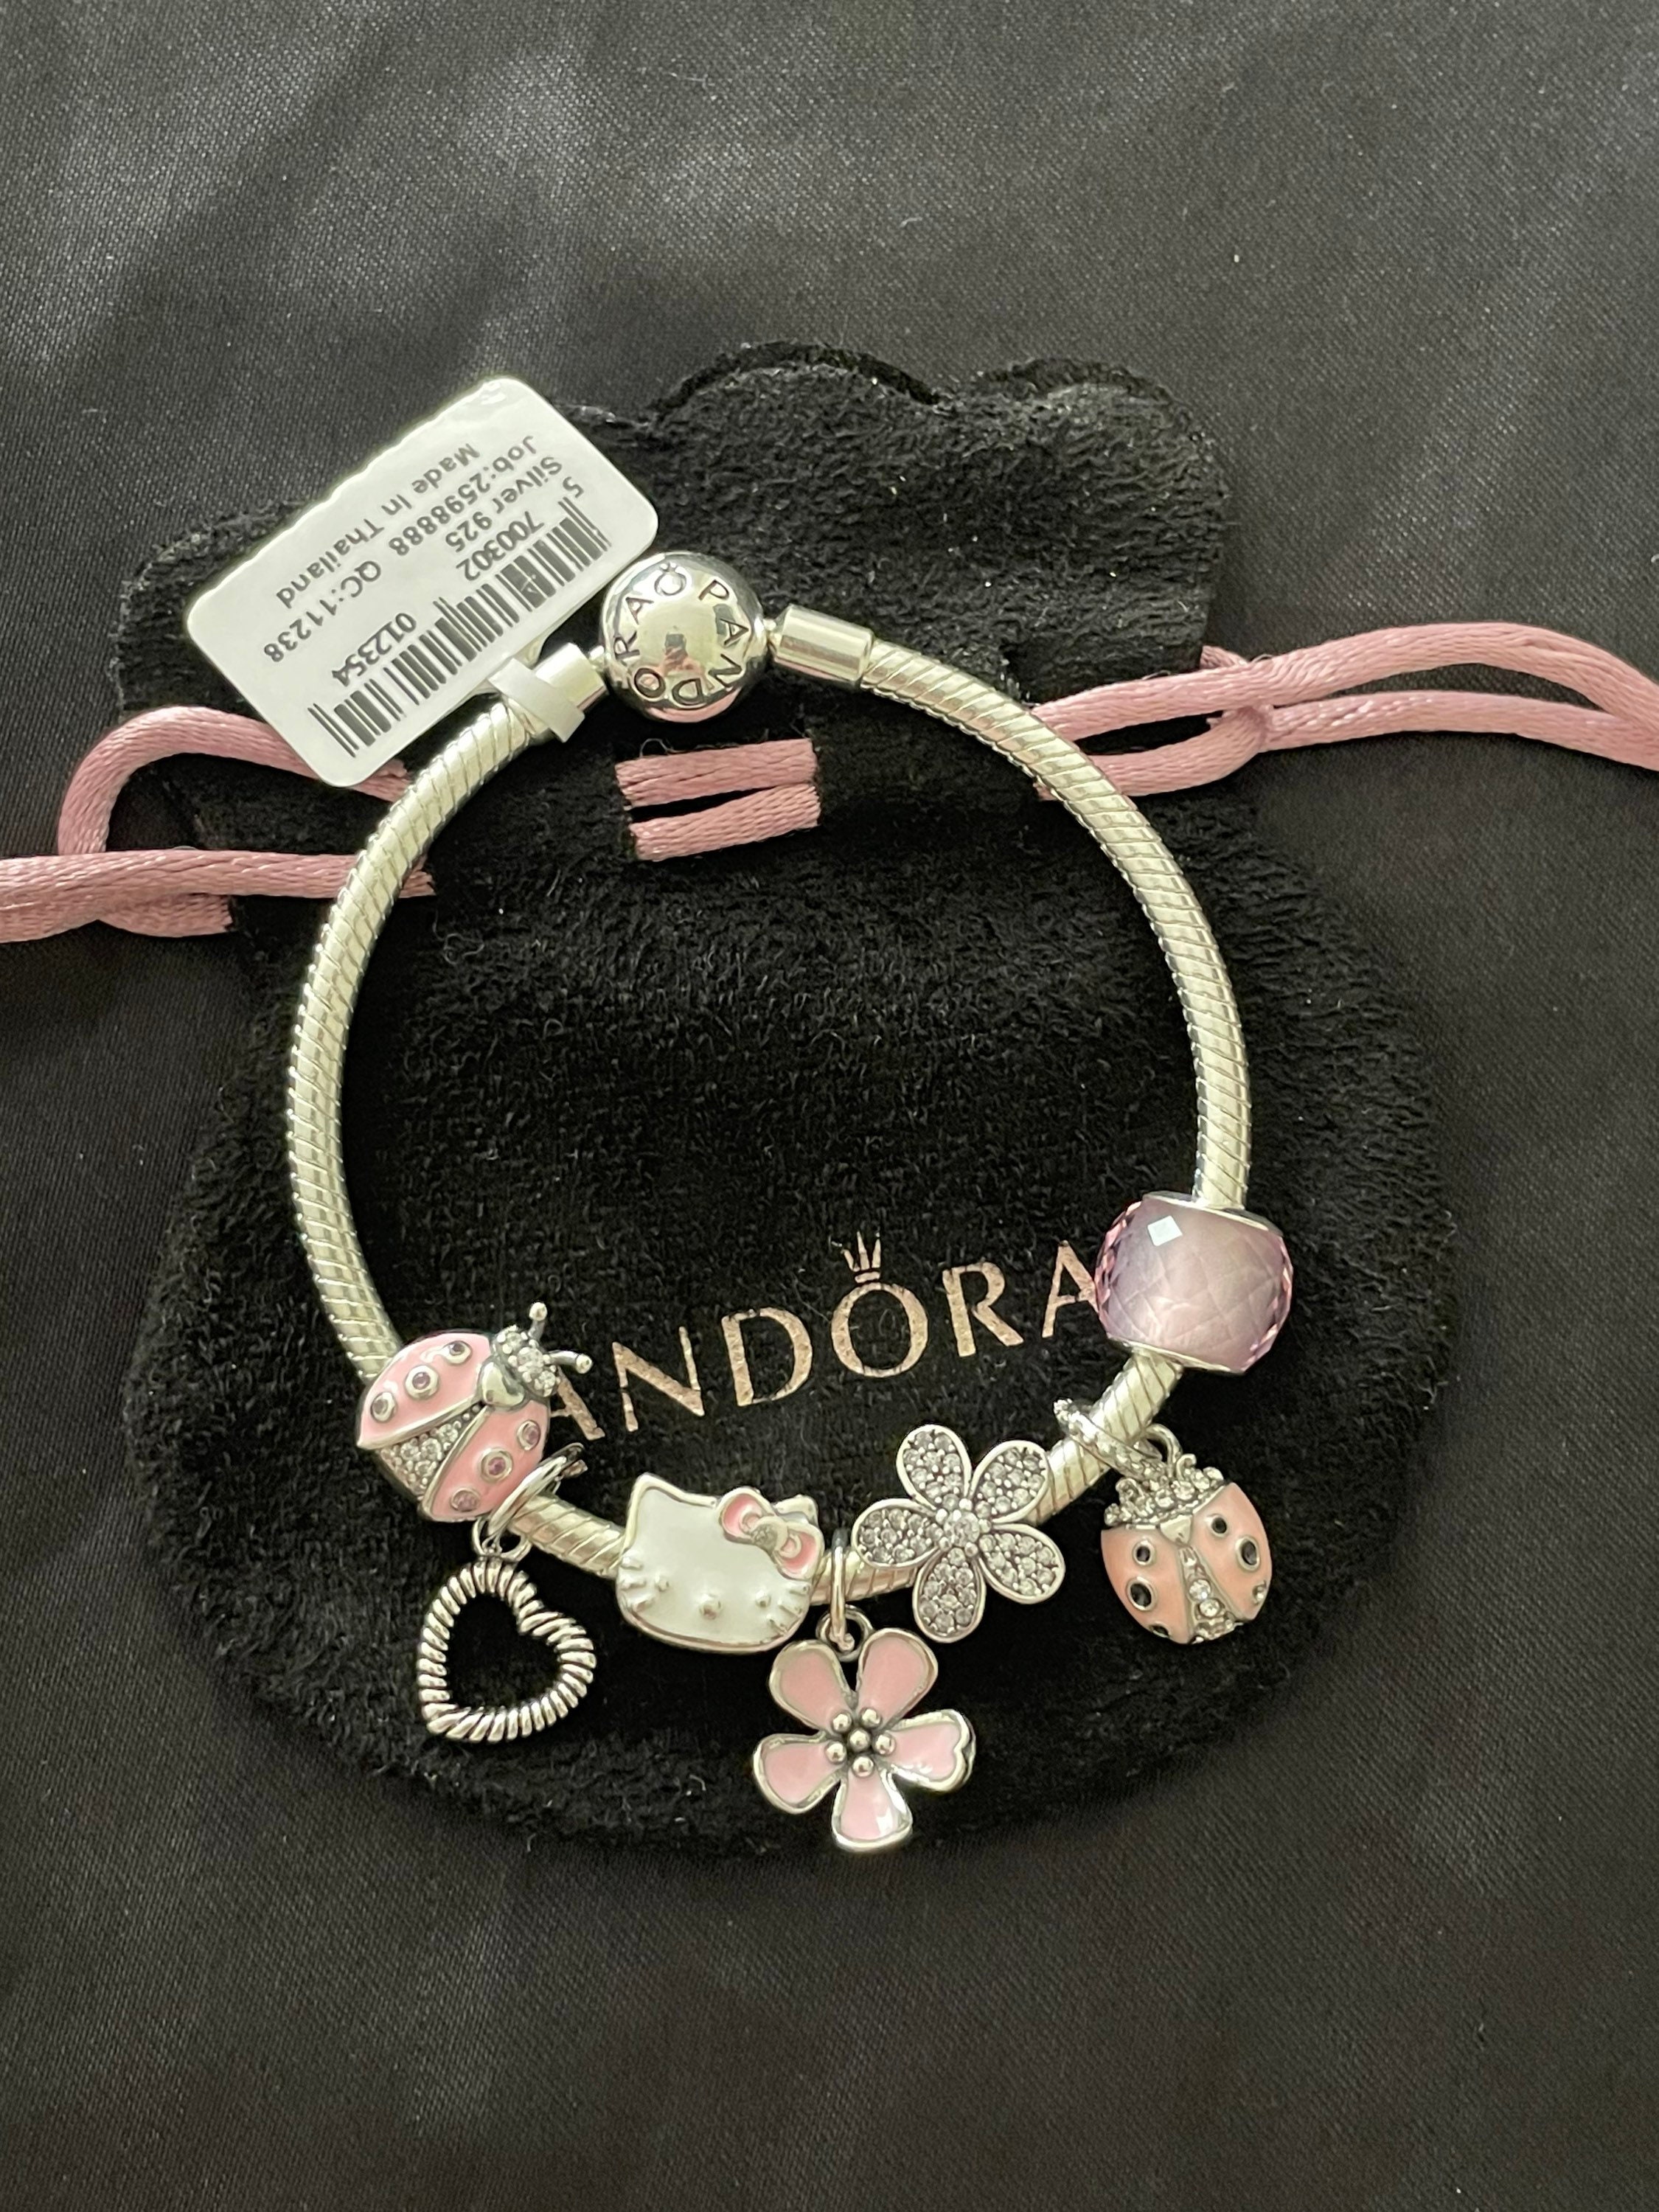 Pandora Bracelet with Light Pink Themed Charms